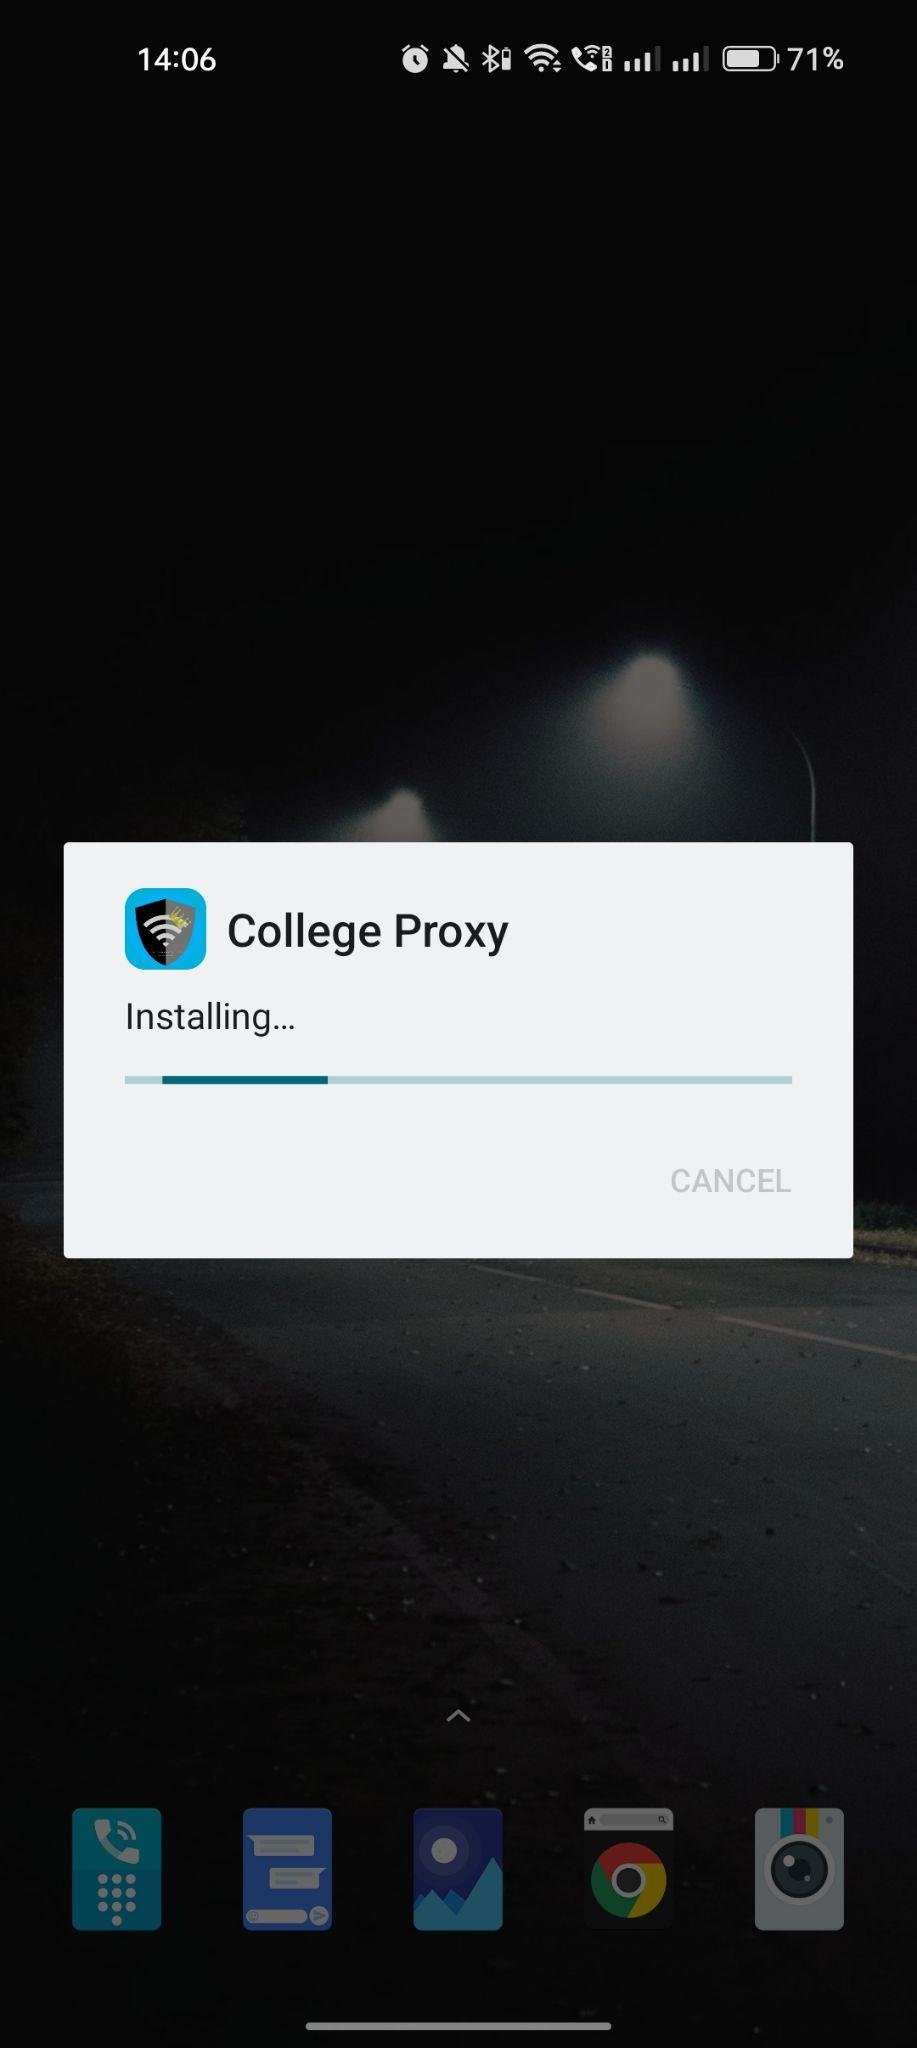 College Proxy apk installing